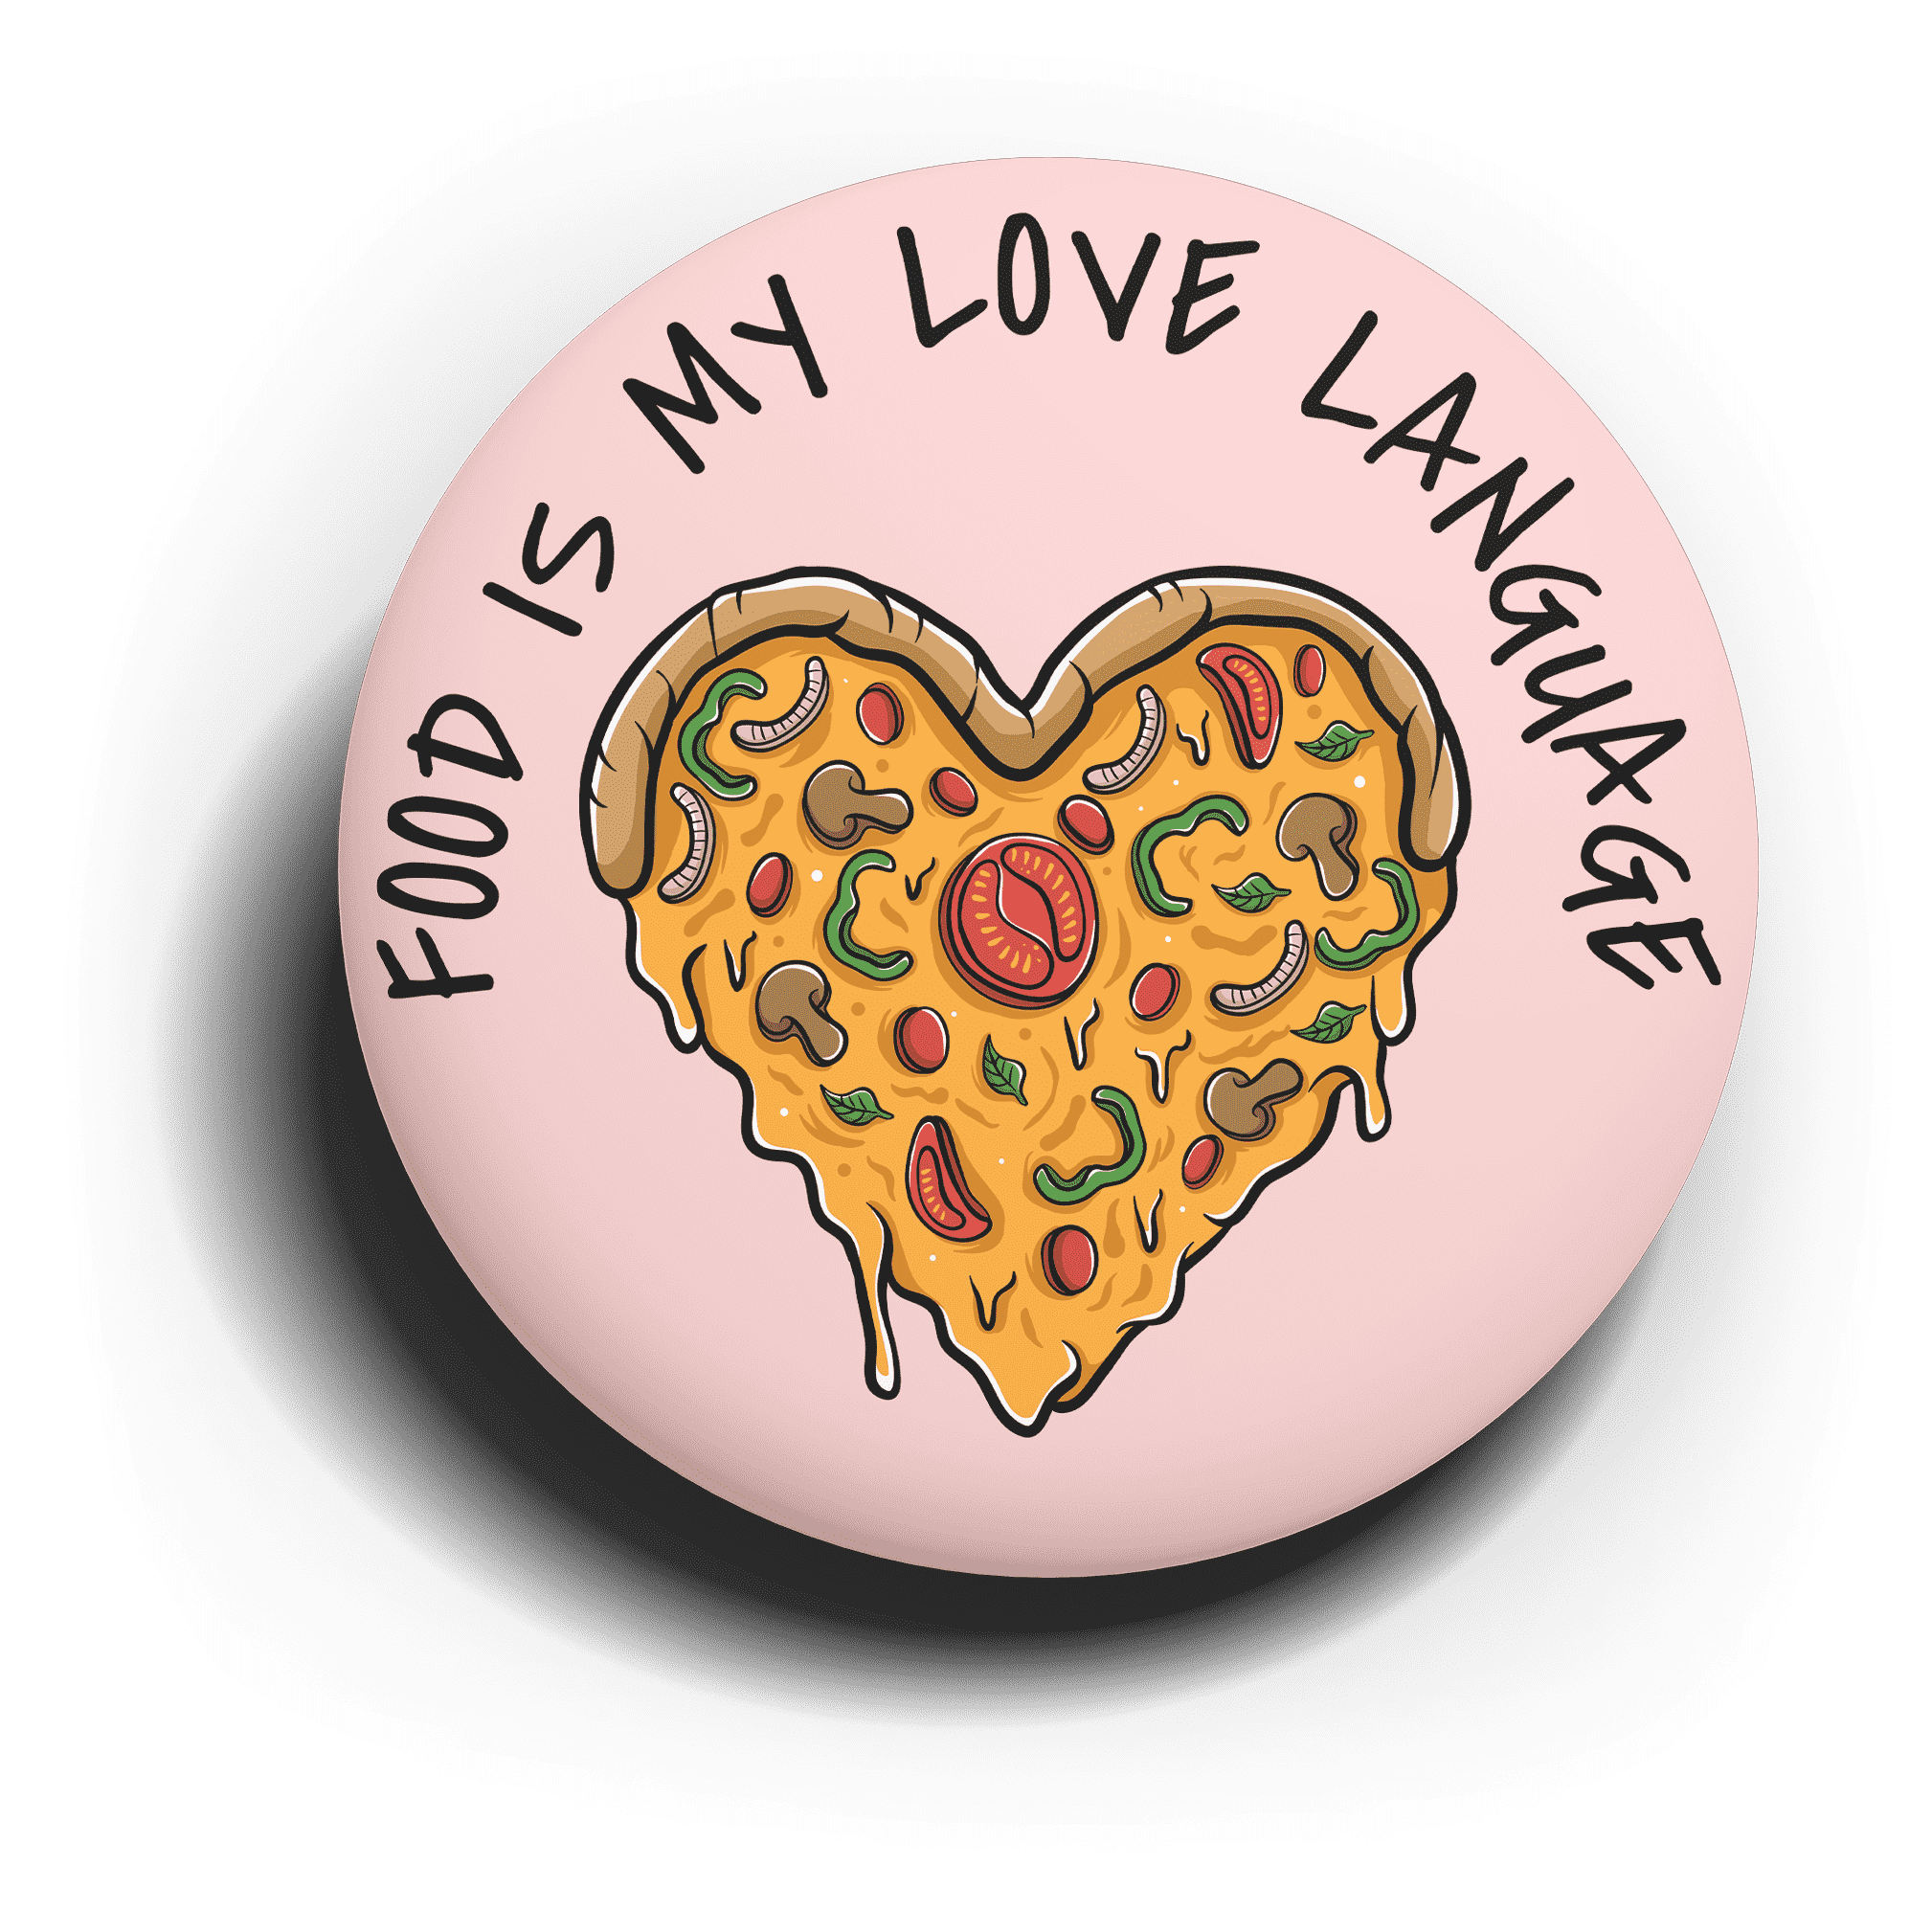 (Love) Food is My Love Language